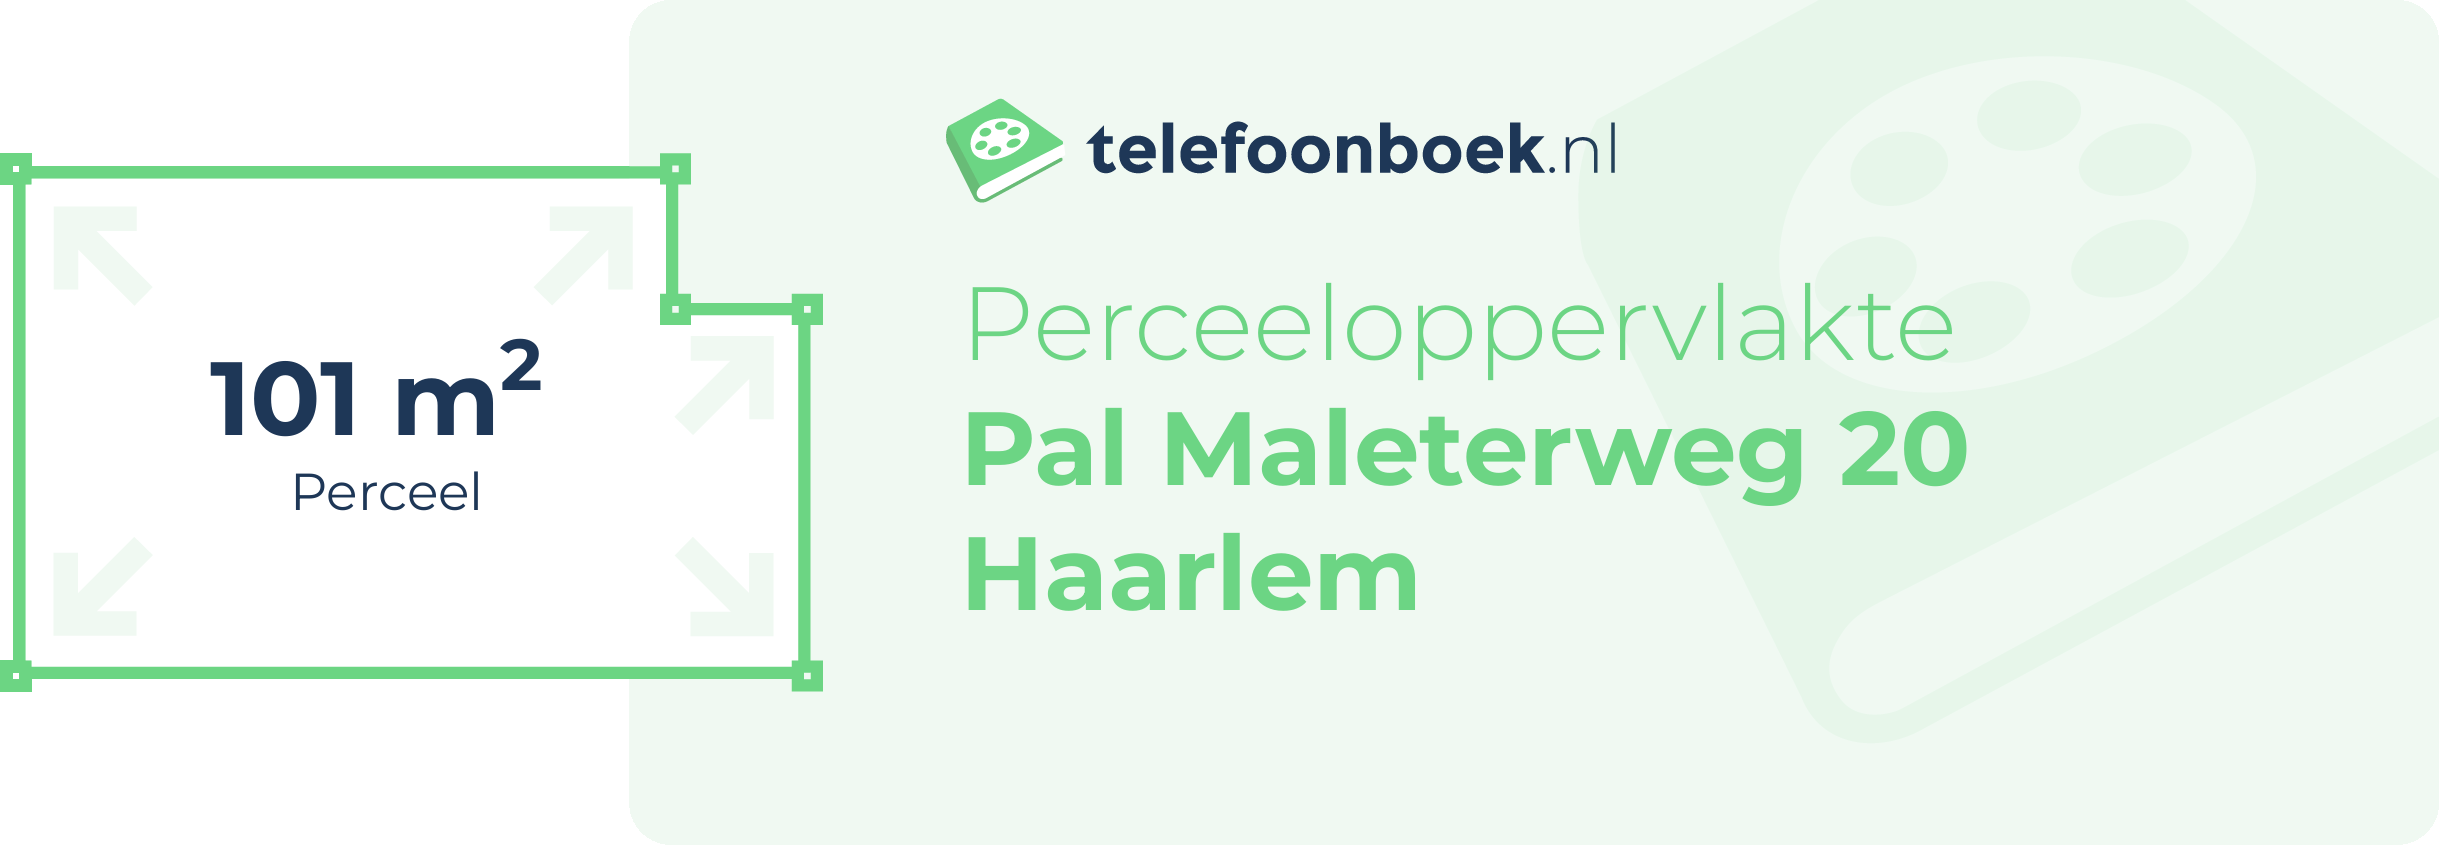 Perceeloppervlakte Pal Maleterweg 20 Haarlem